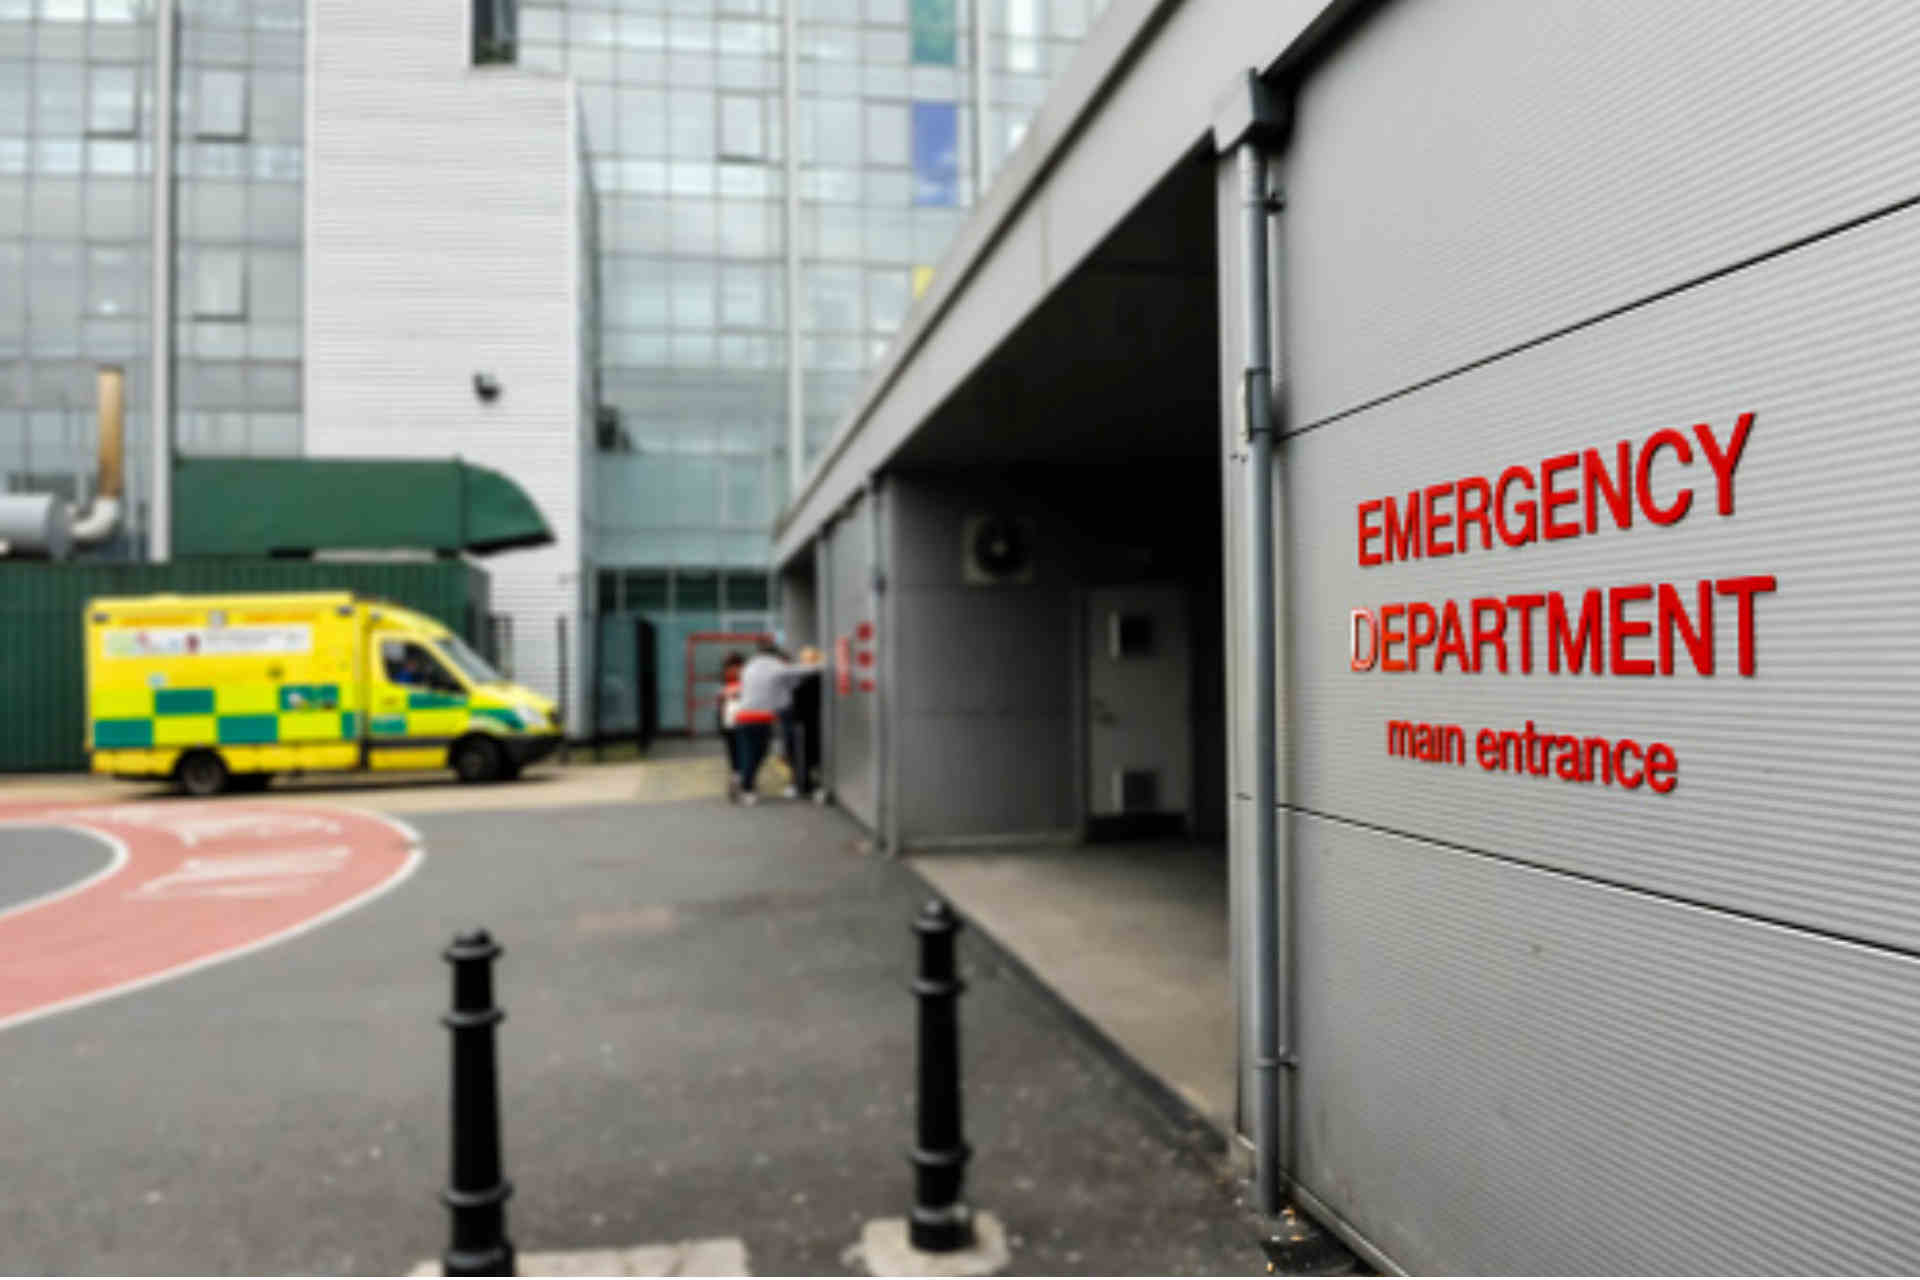 External photo of a hospital emergency department